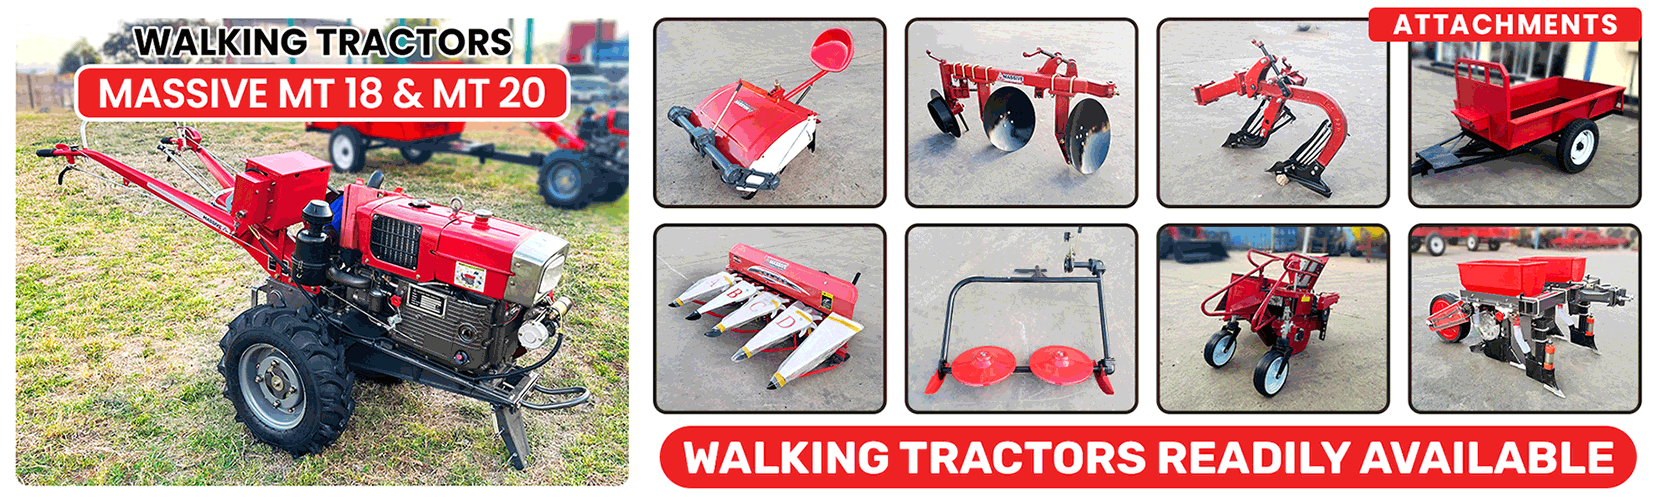 Walking Tractors for Sale in Zimbabwe